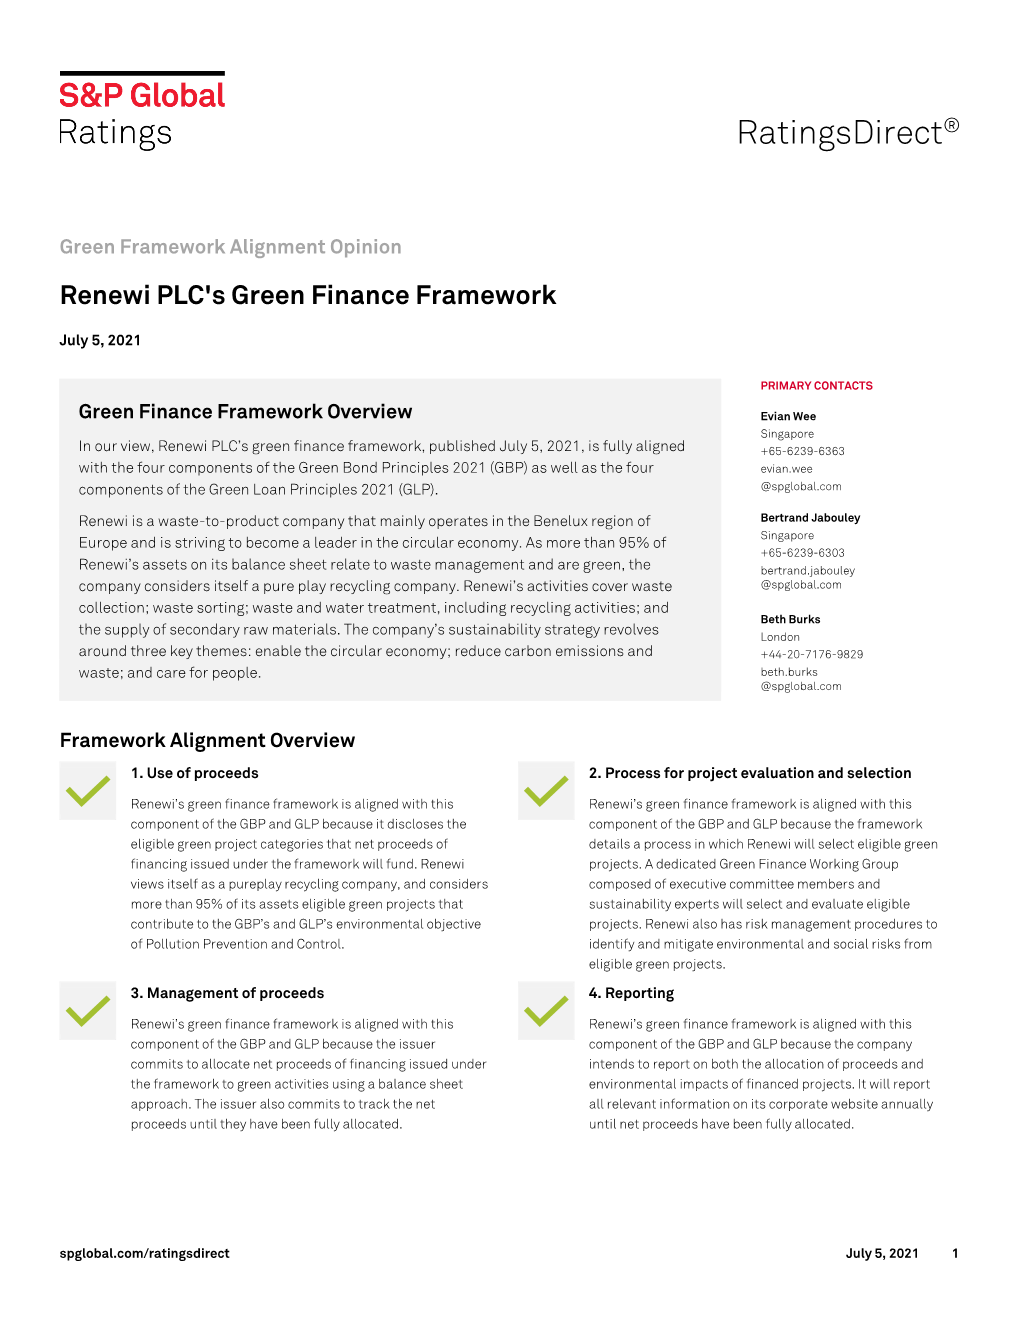 Renewi PLC's Green Finance Framework